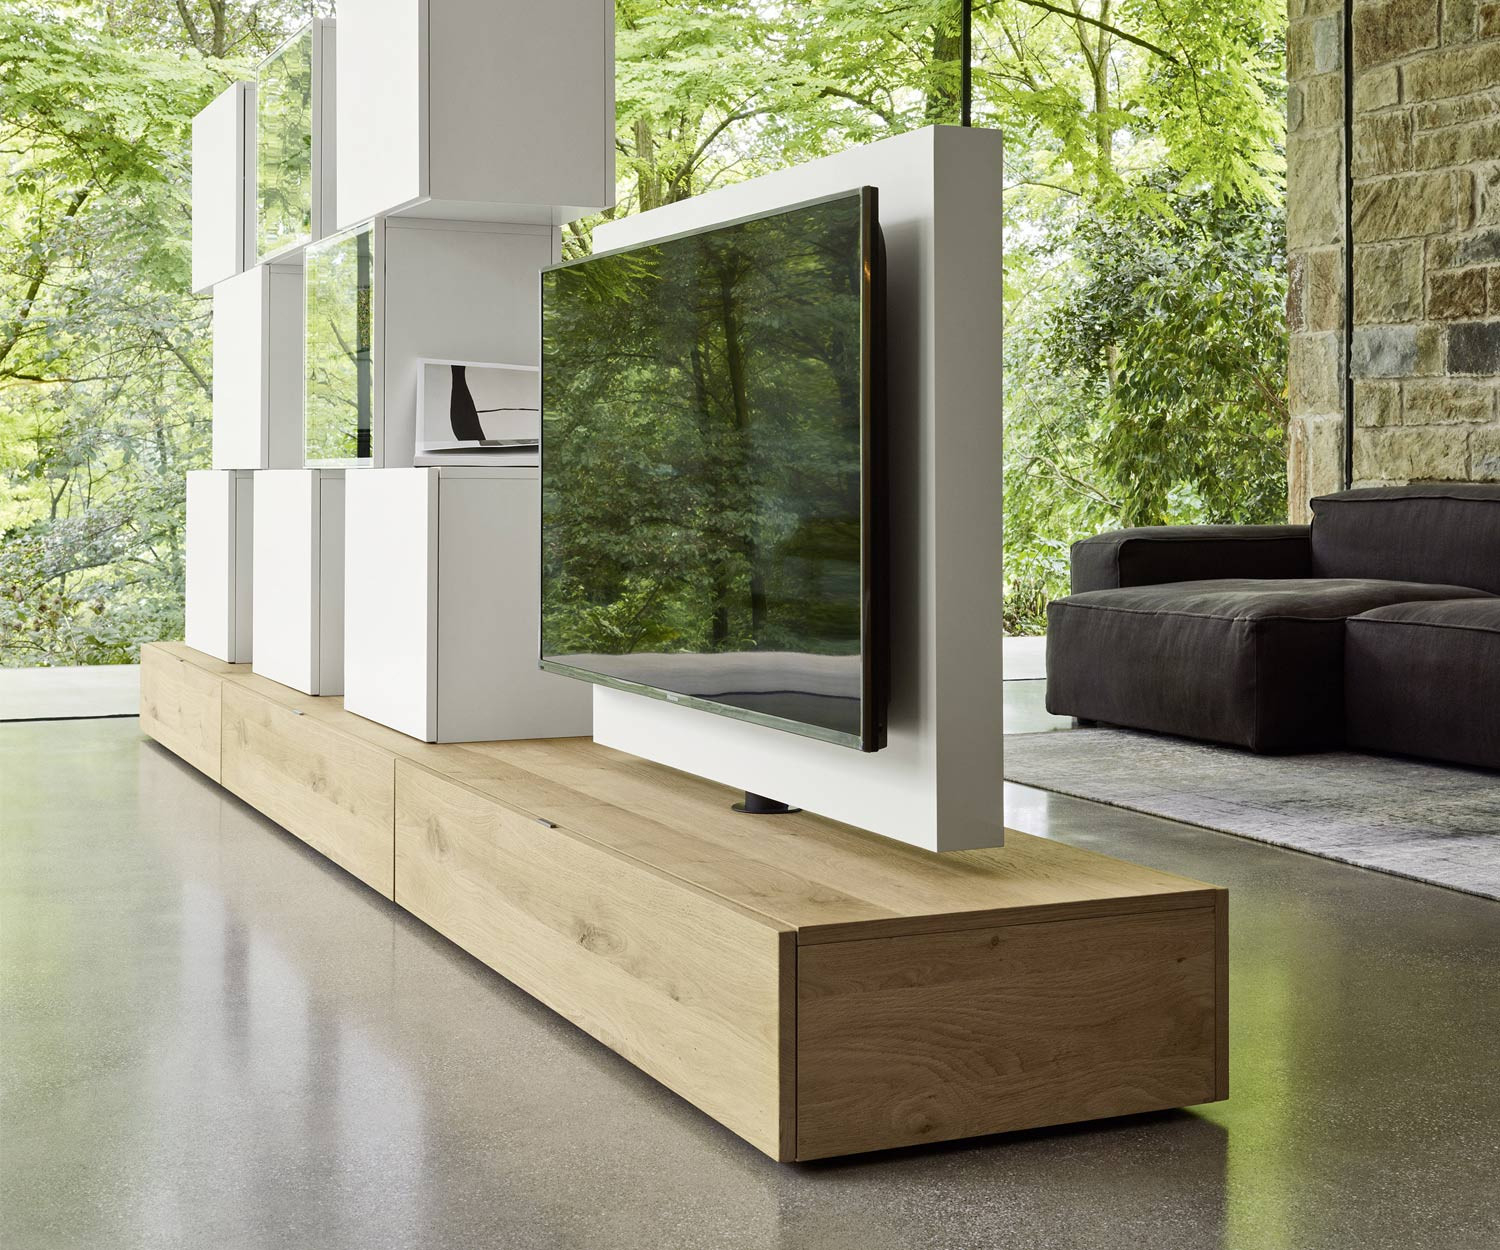 Livitalia Roto Design Lowboard Raumteiler Tv Paneel Drehbar inside Trennwand Wohnzimmer